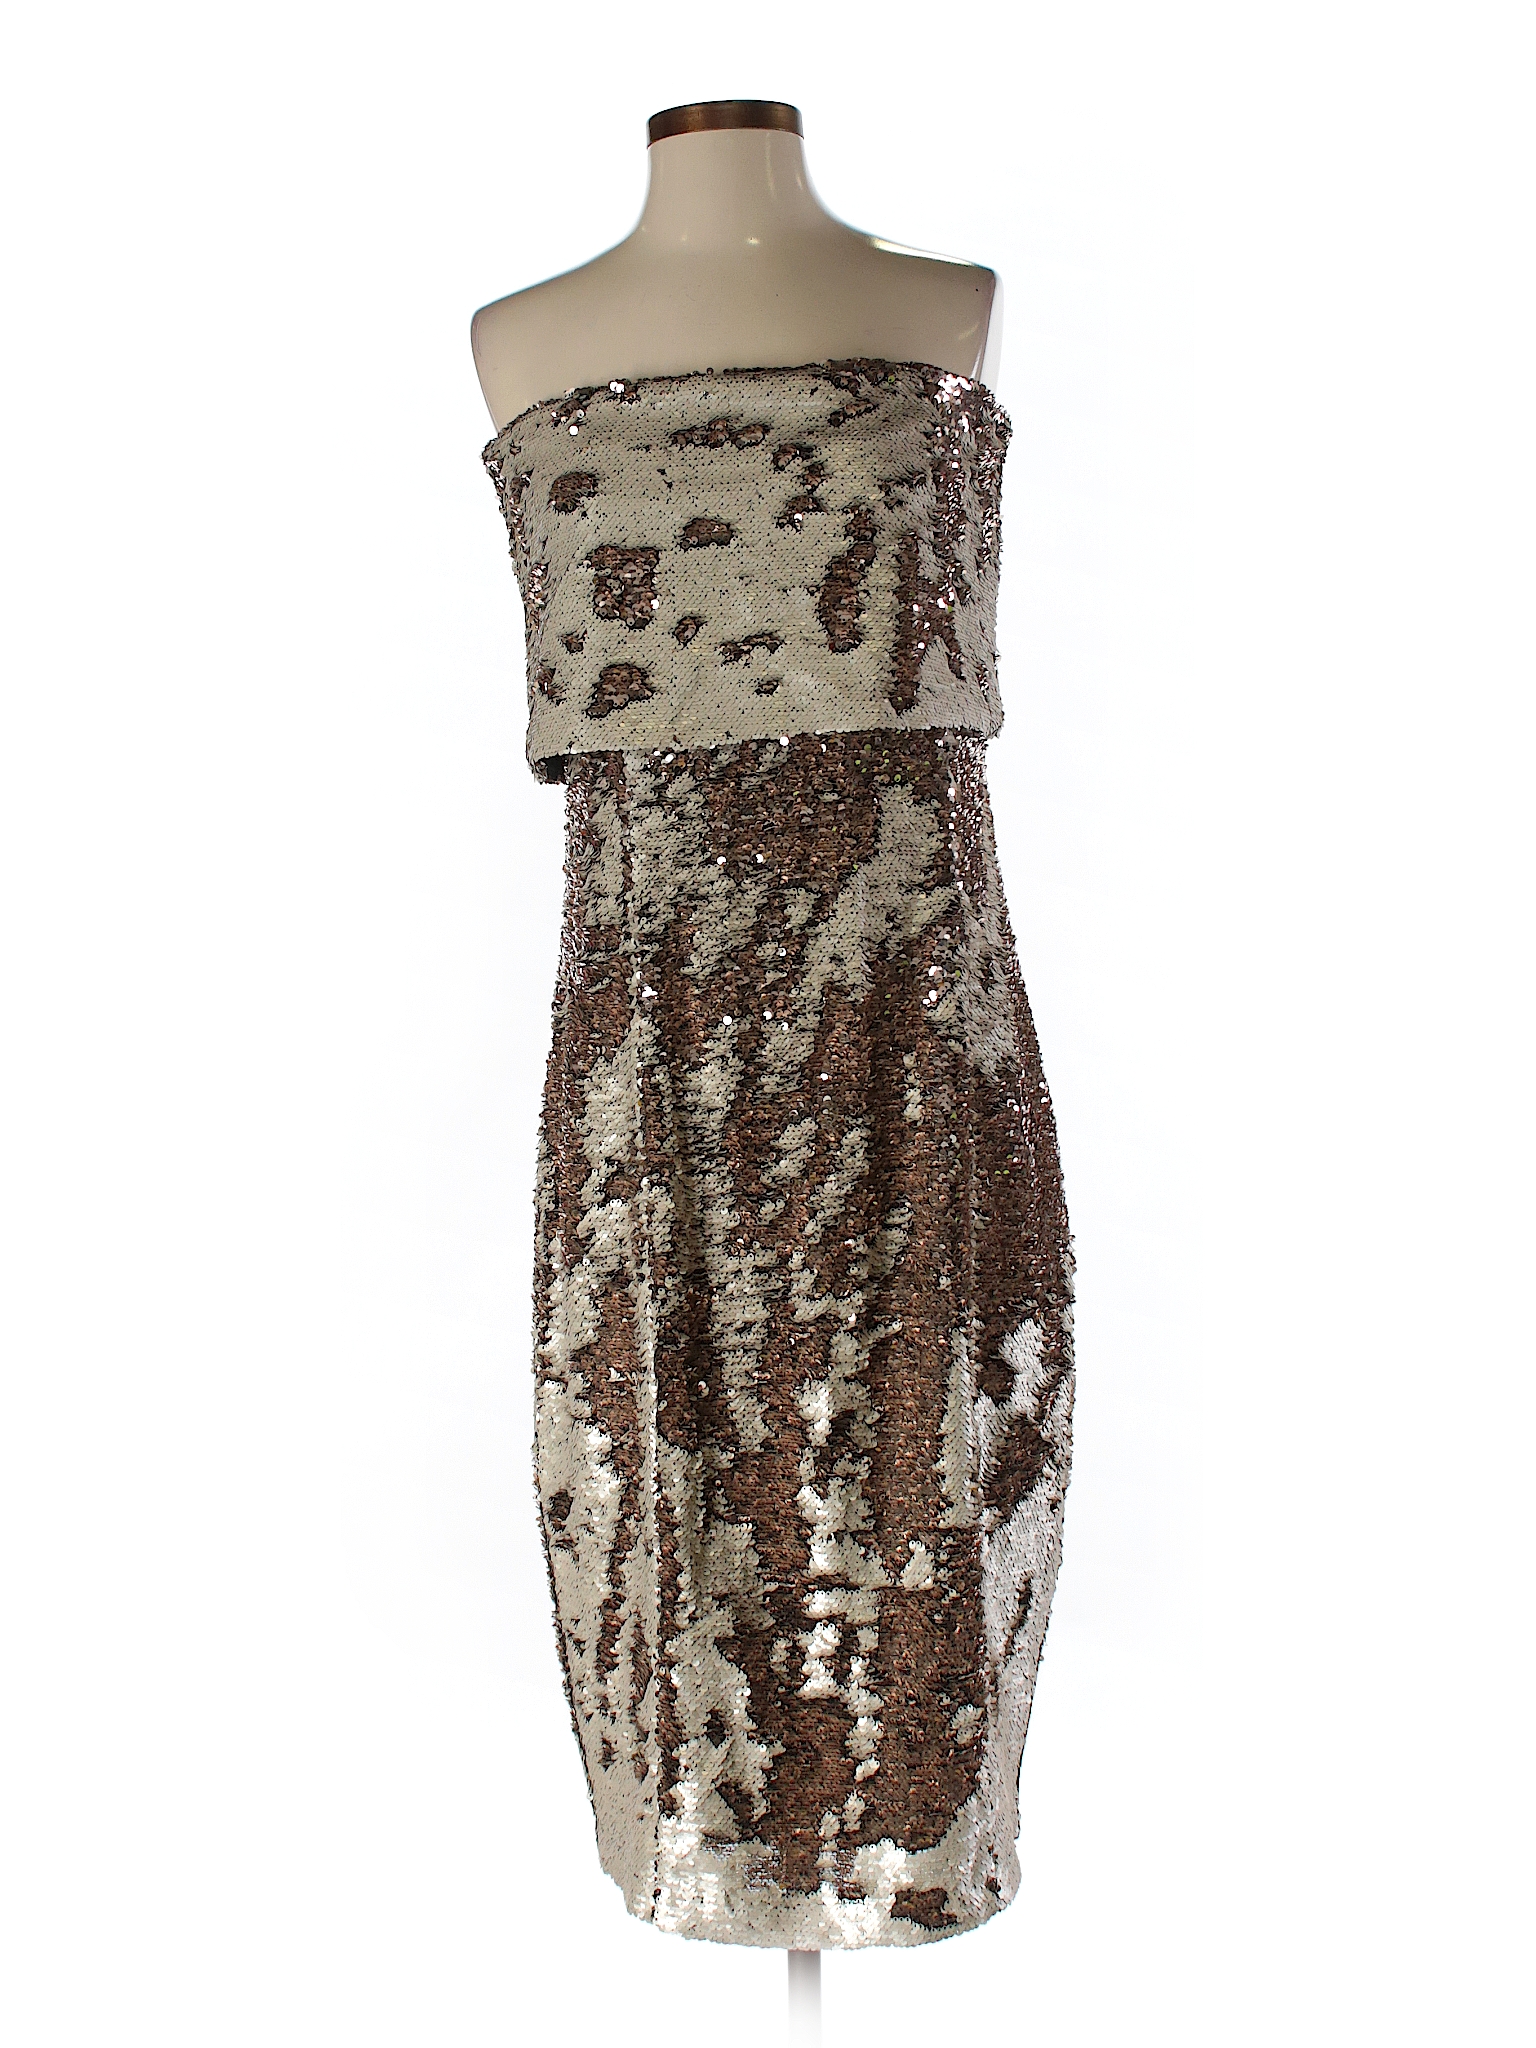 Lavish Alice 100% Polyester Metallic Tan Cocktail Dress Size 12 - 73%